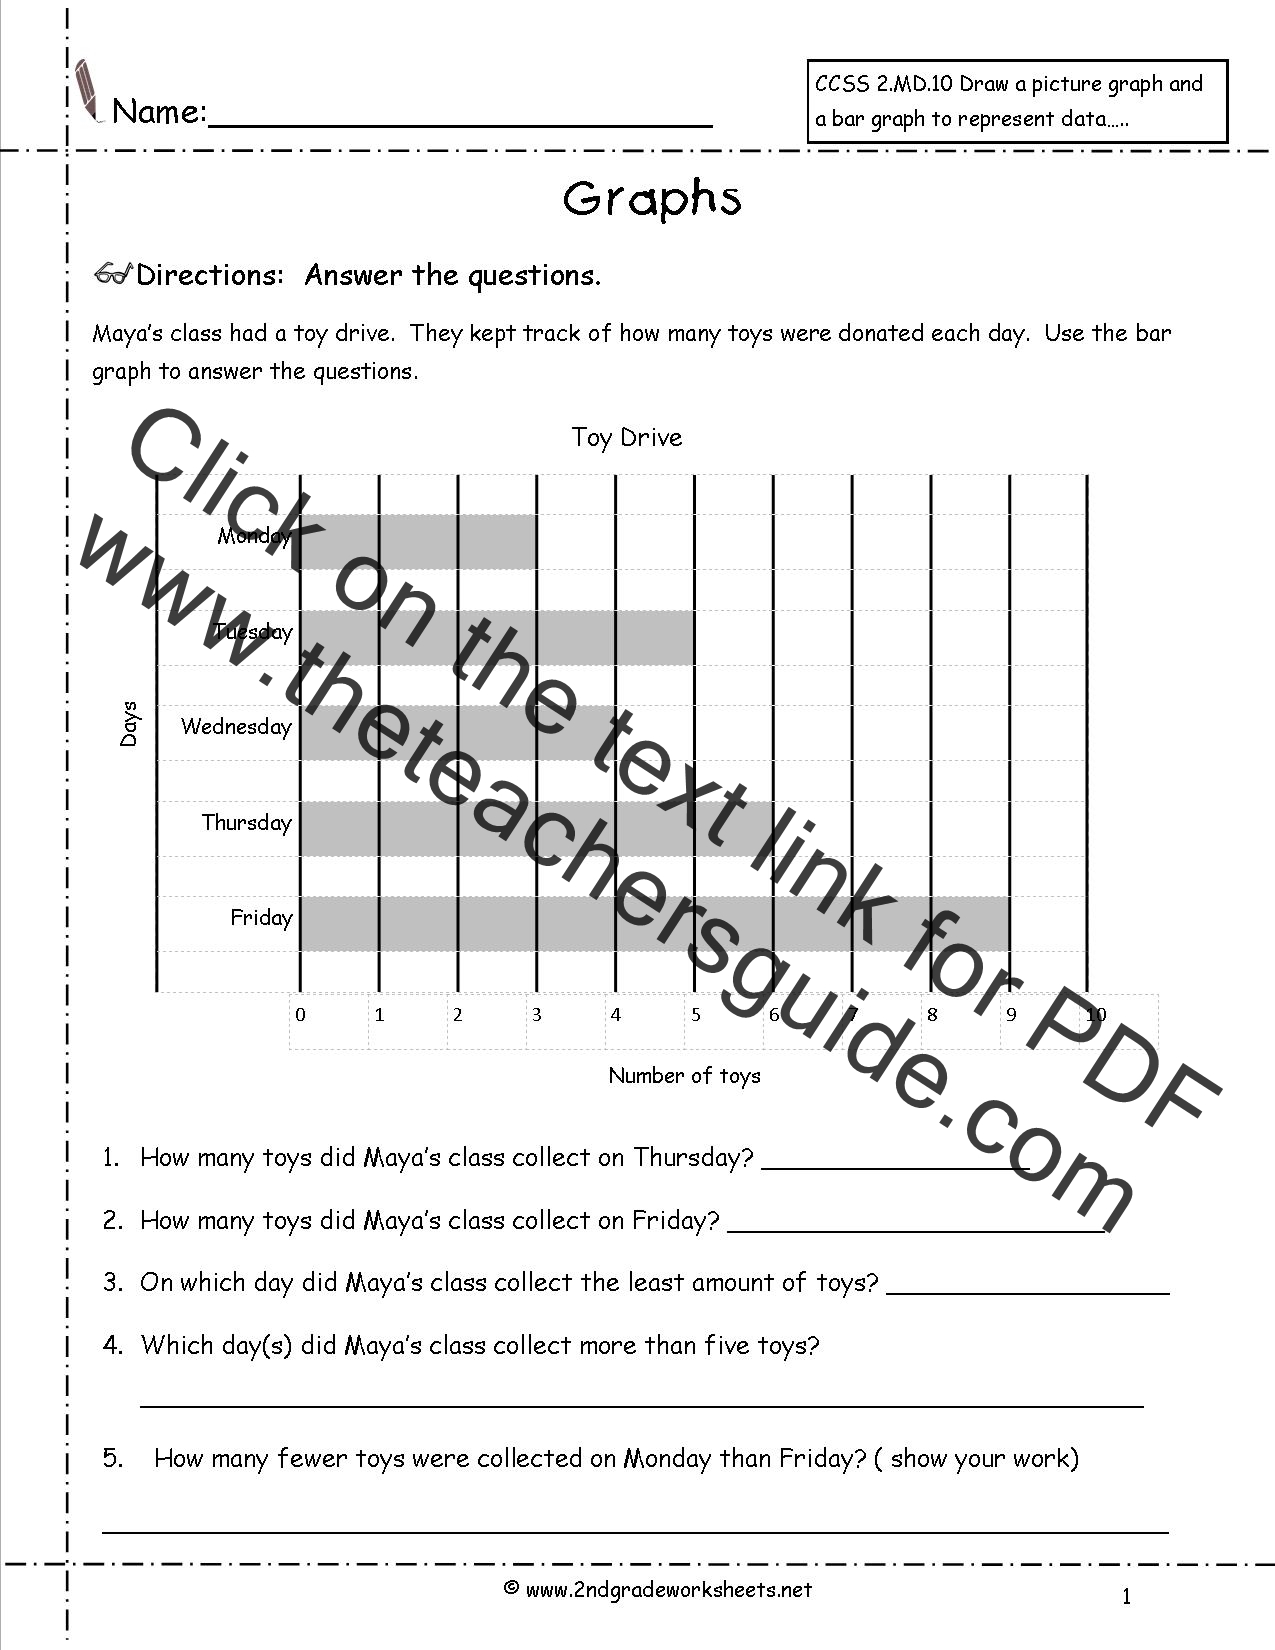 Reading Charts And Graphs Worksheets Free